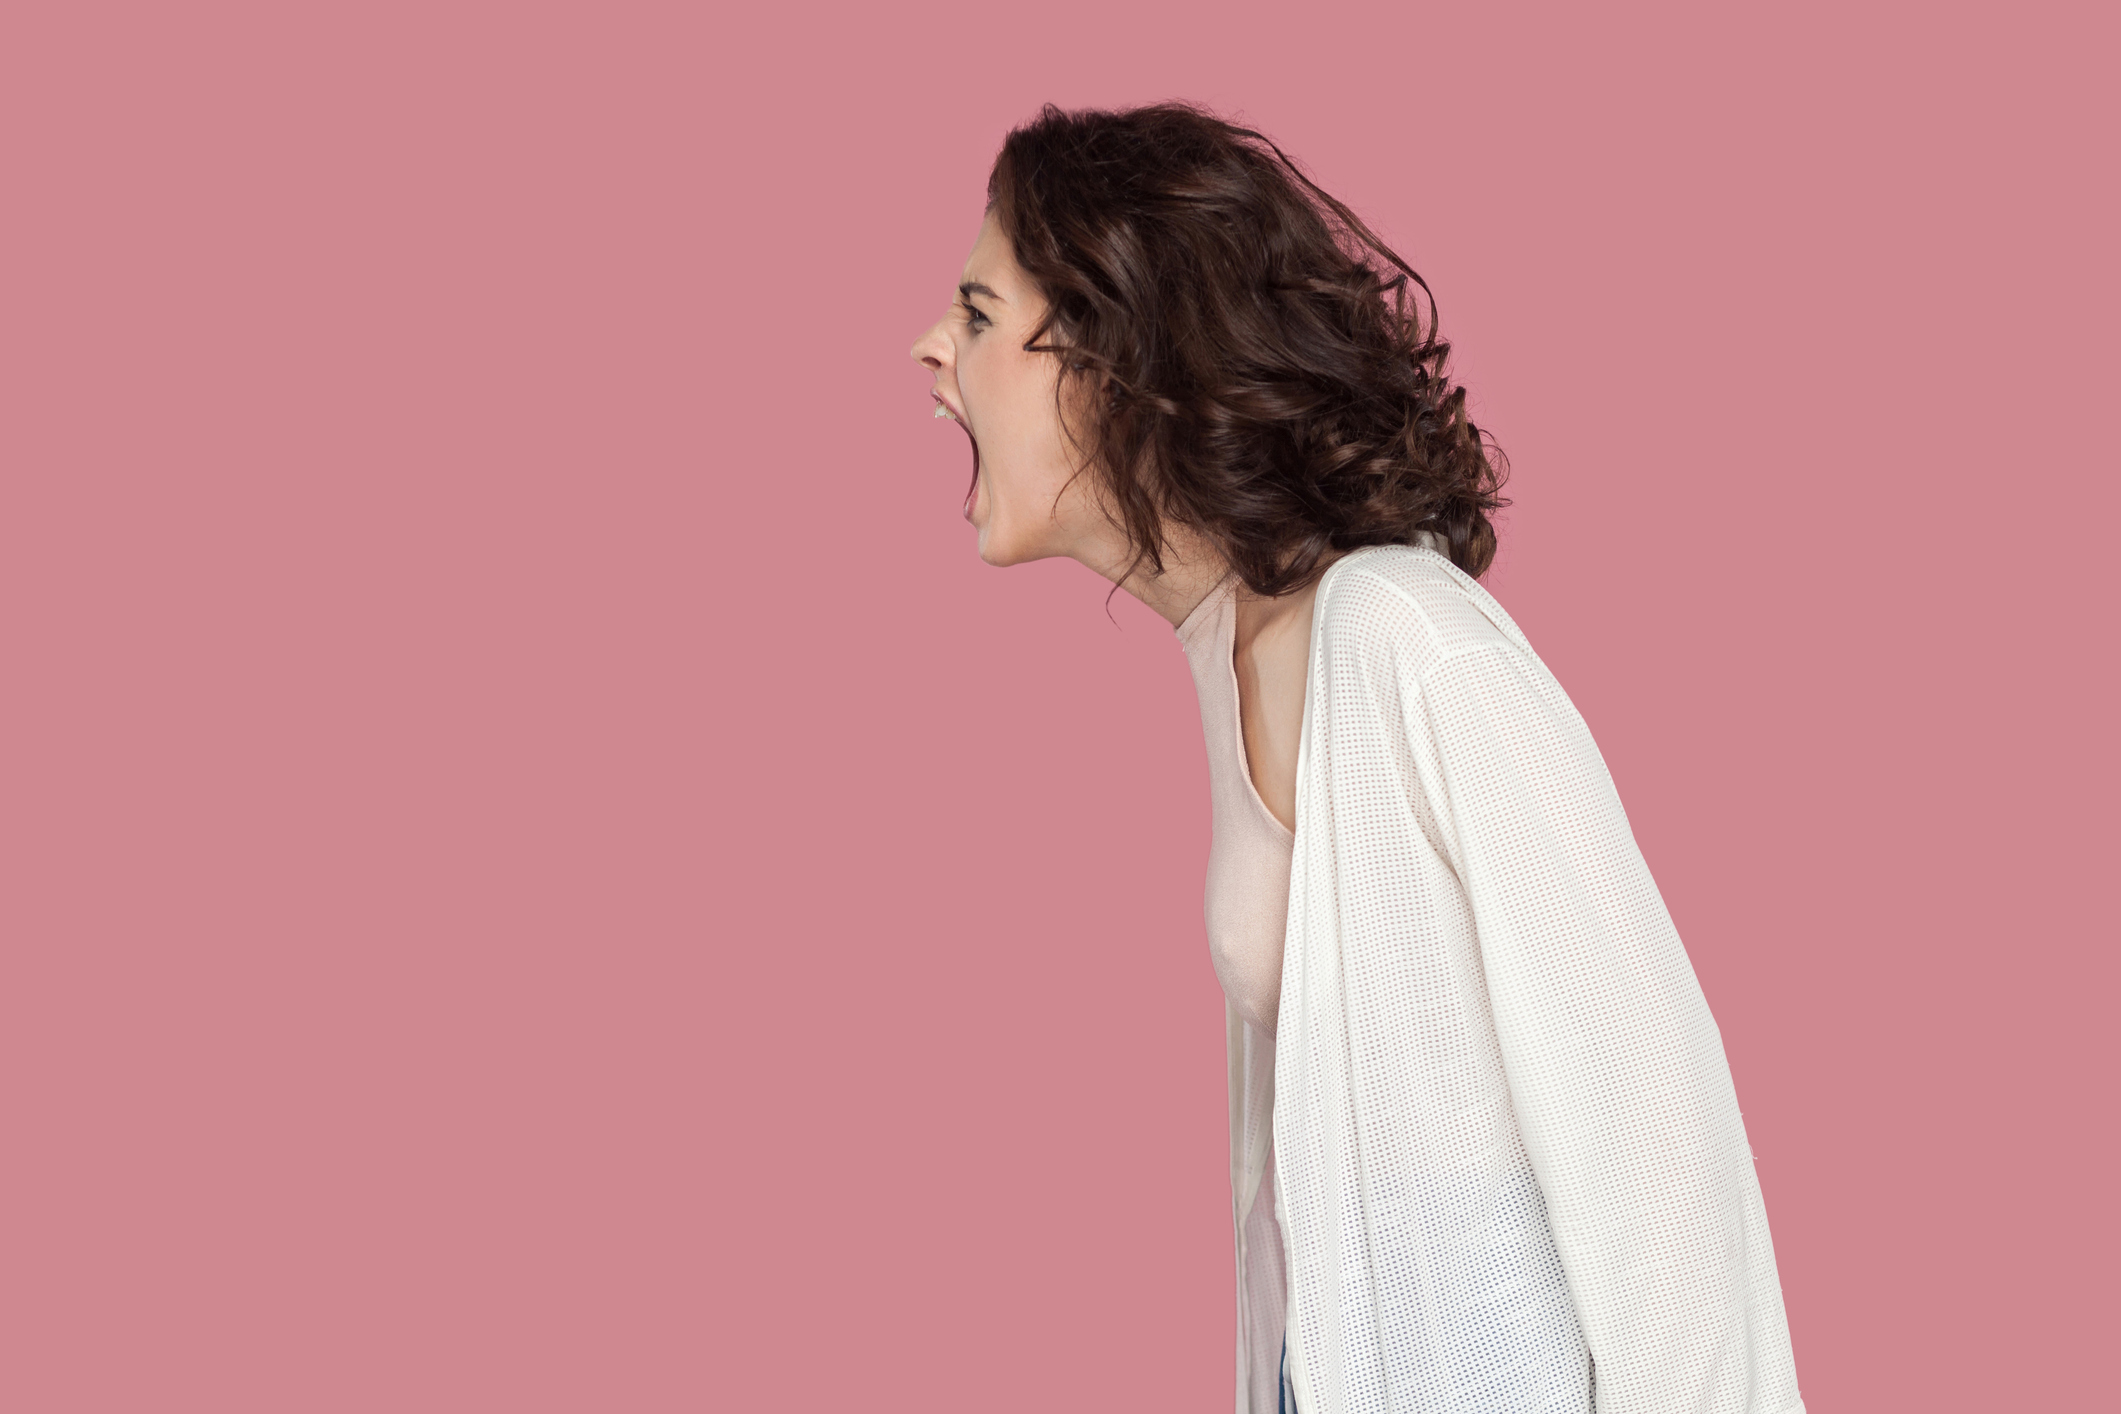 Screaming Therapy: Μήπως βοηθάει τελικά να αρχίσεις να ουρλιάζεις;